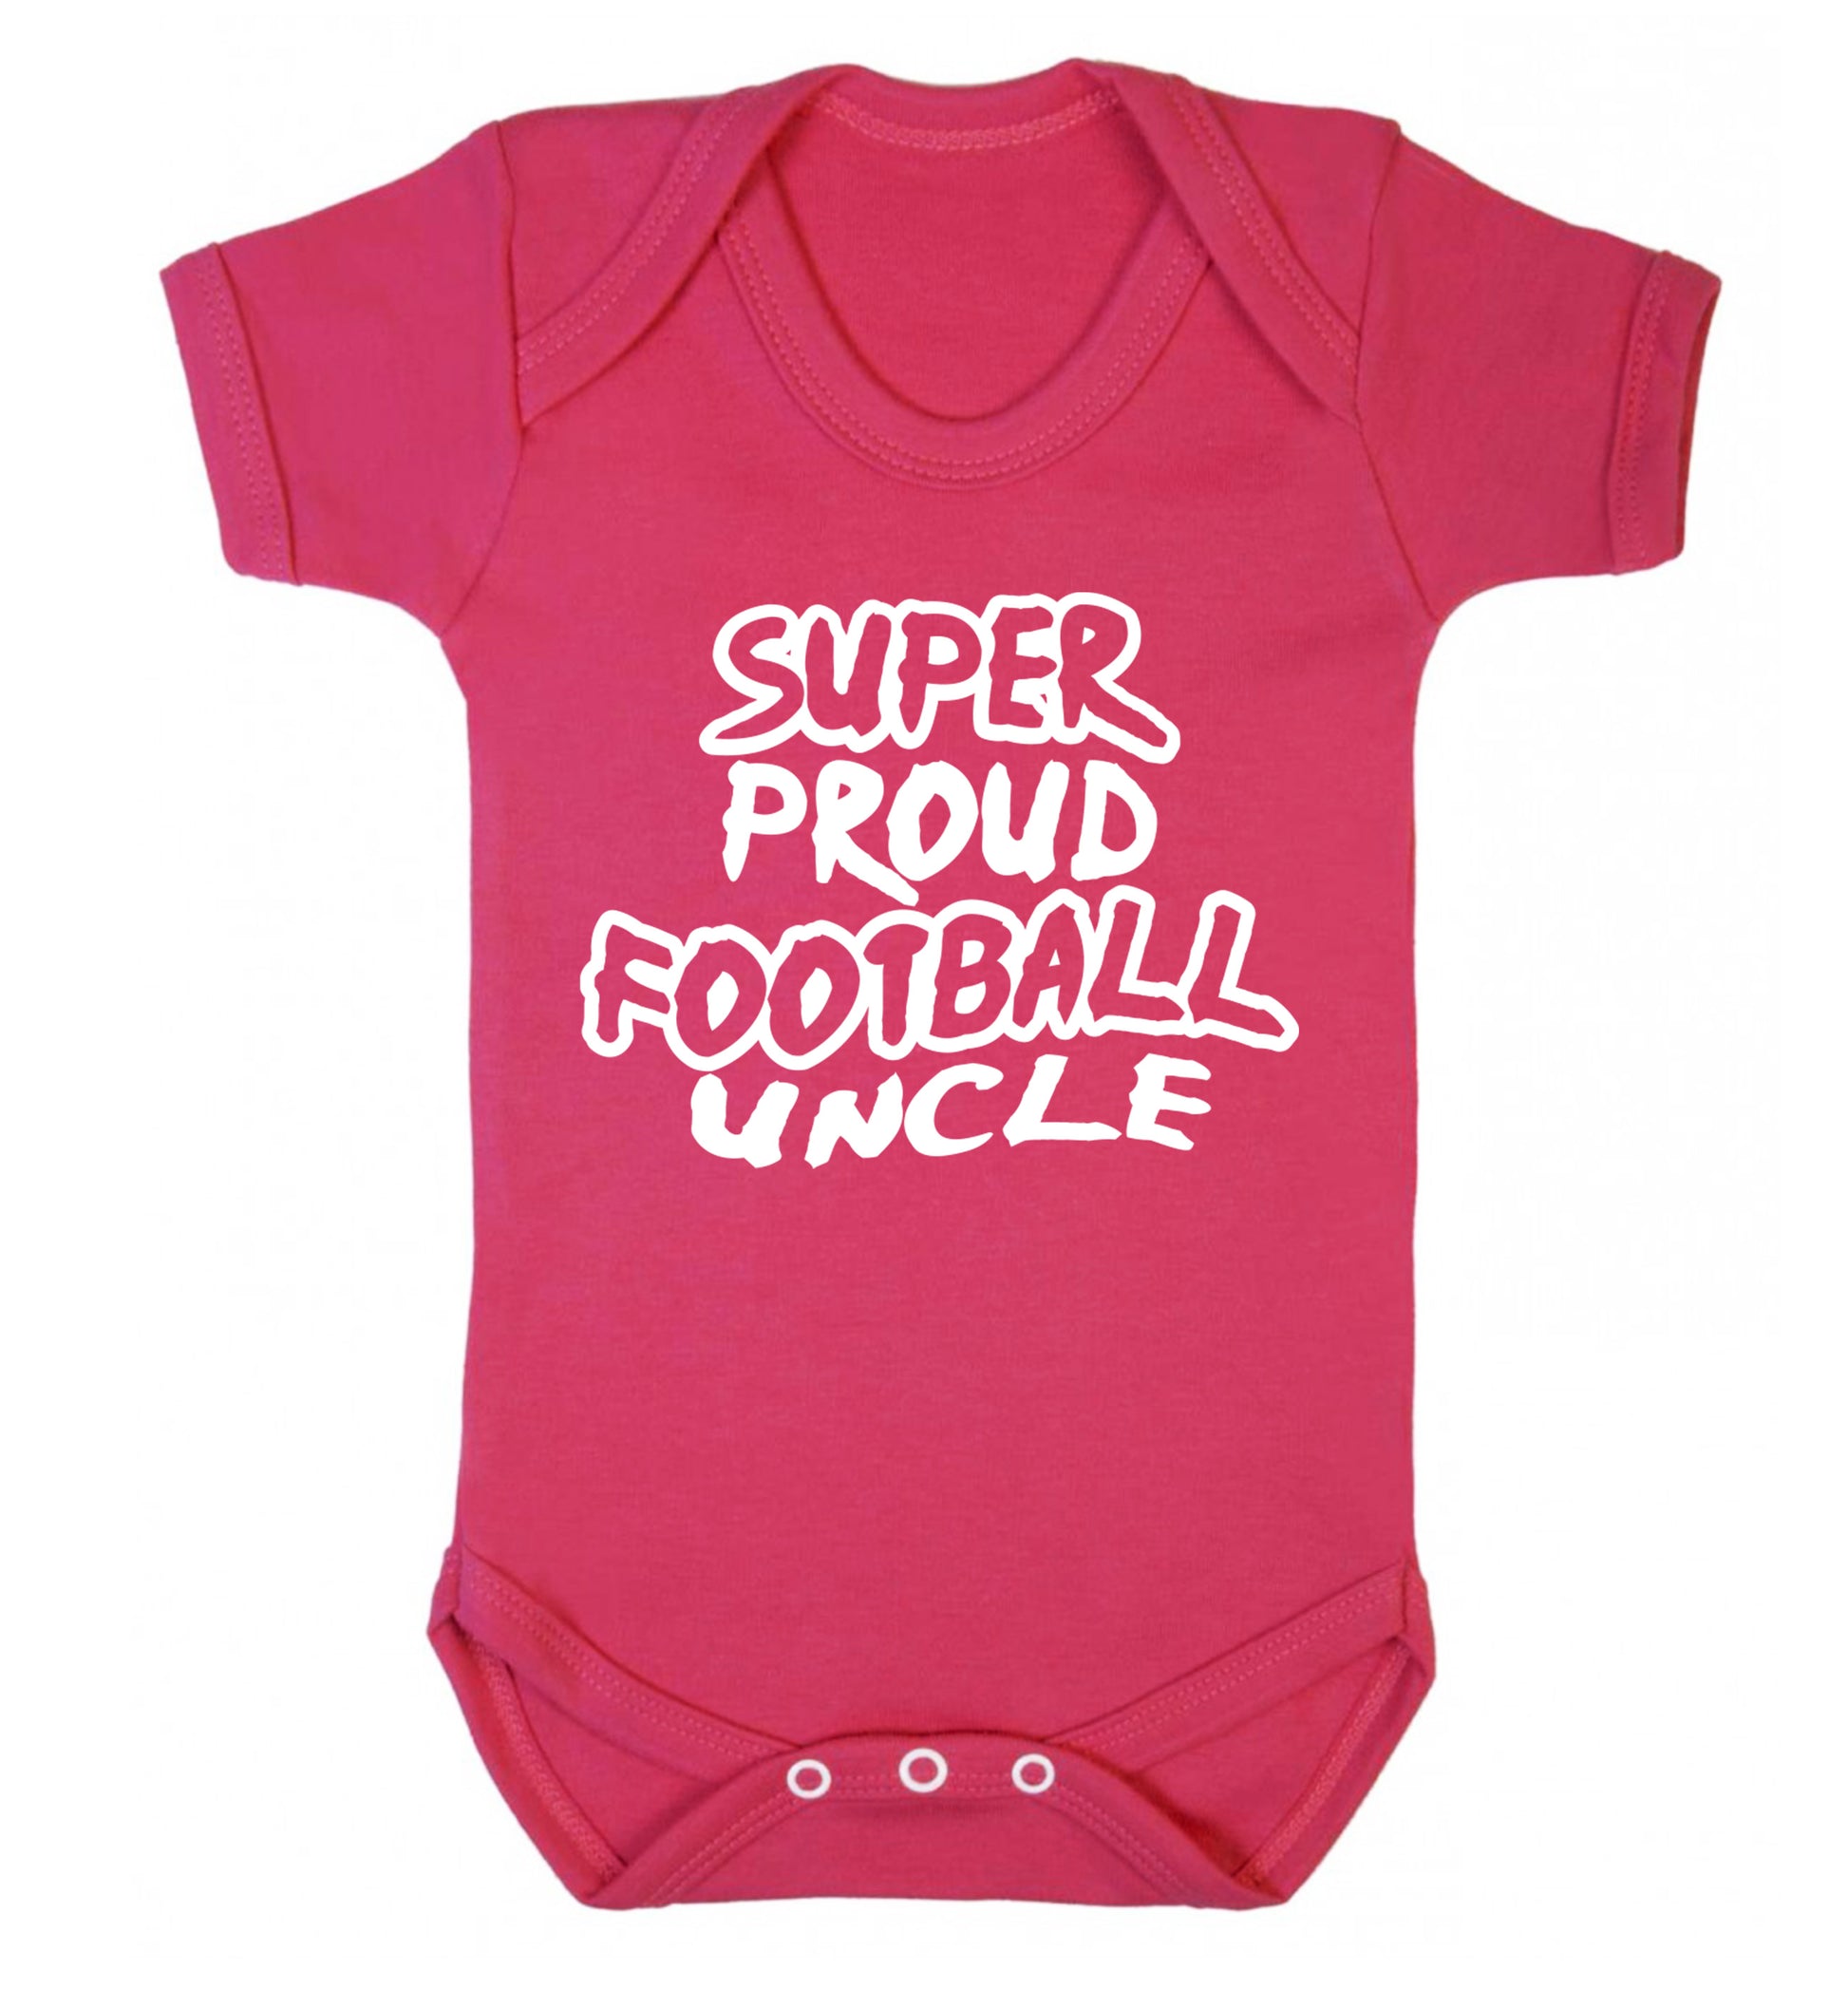 Super proud football uncle Baby Vest dark pink 18-24 months